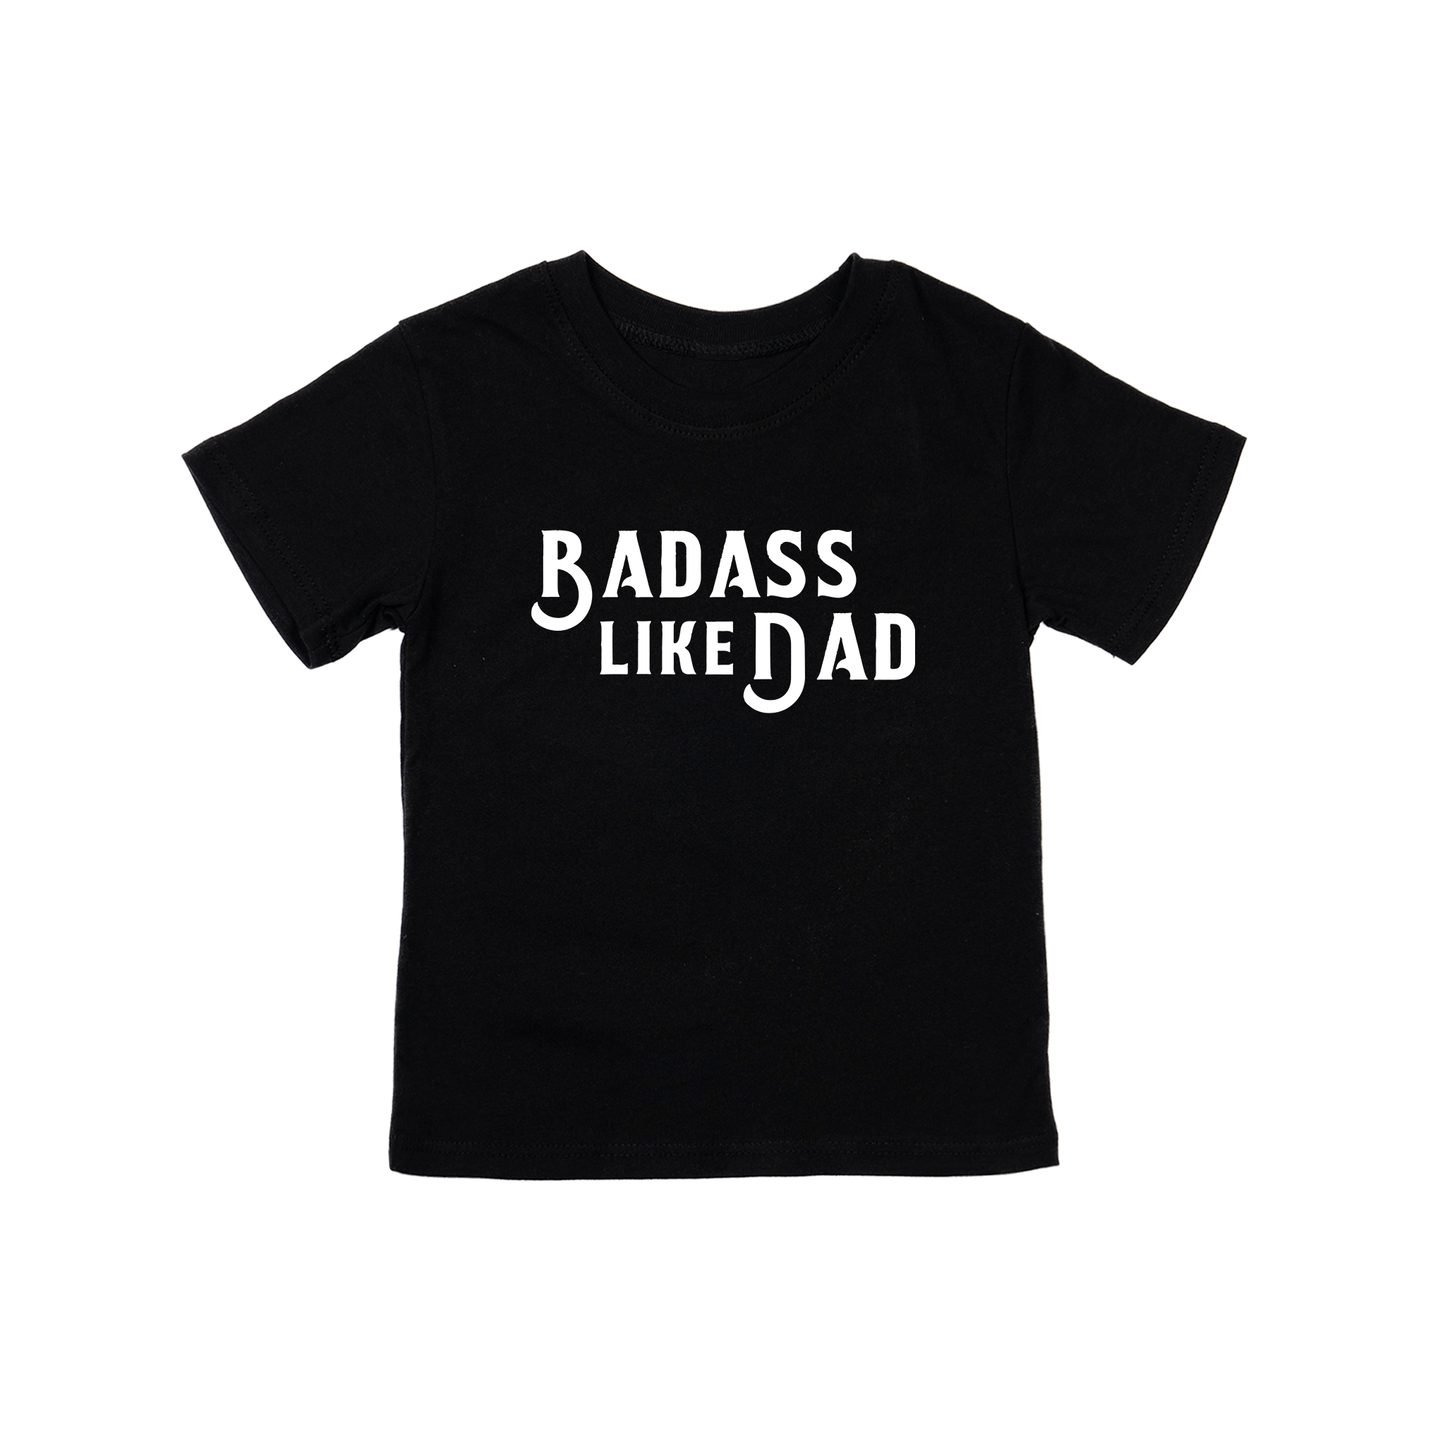 Badass Like Dad (White) - Kids Tee (Black)